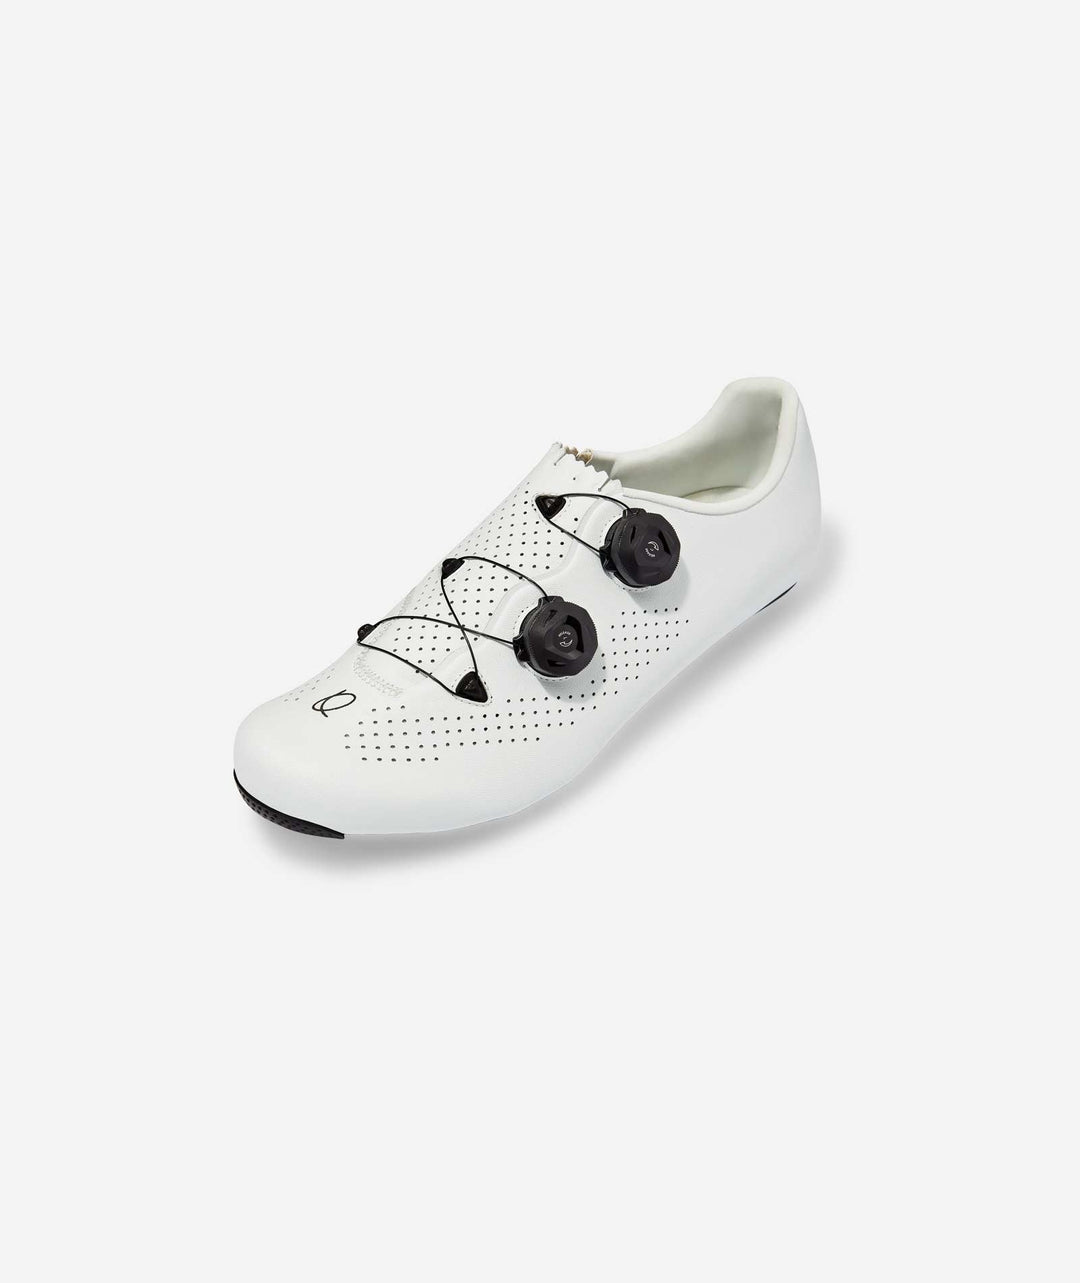 Quoc Mono II Road Shoes - White